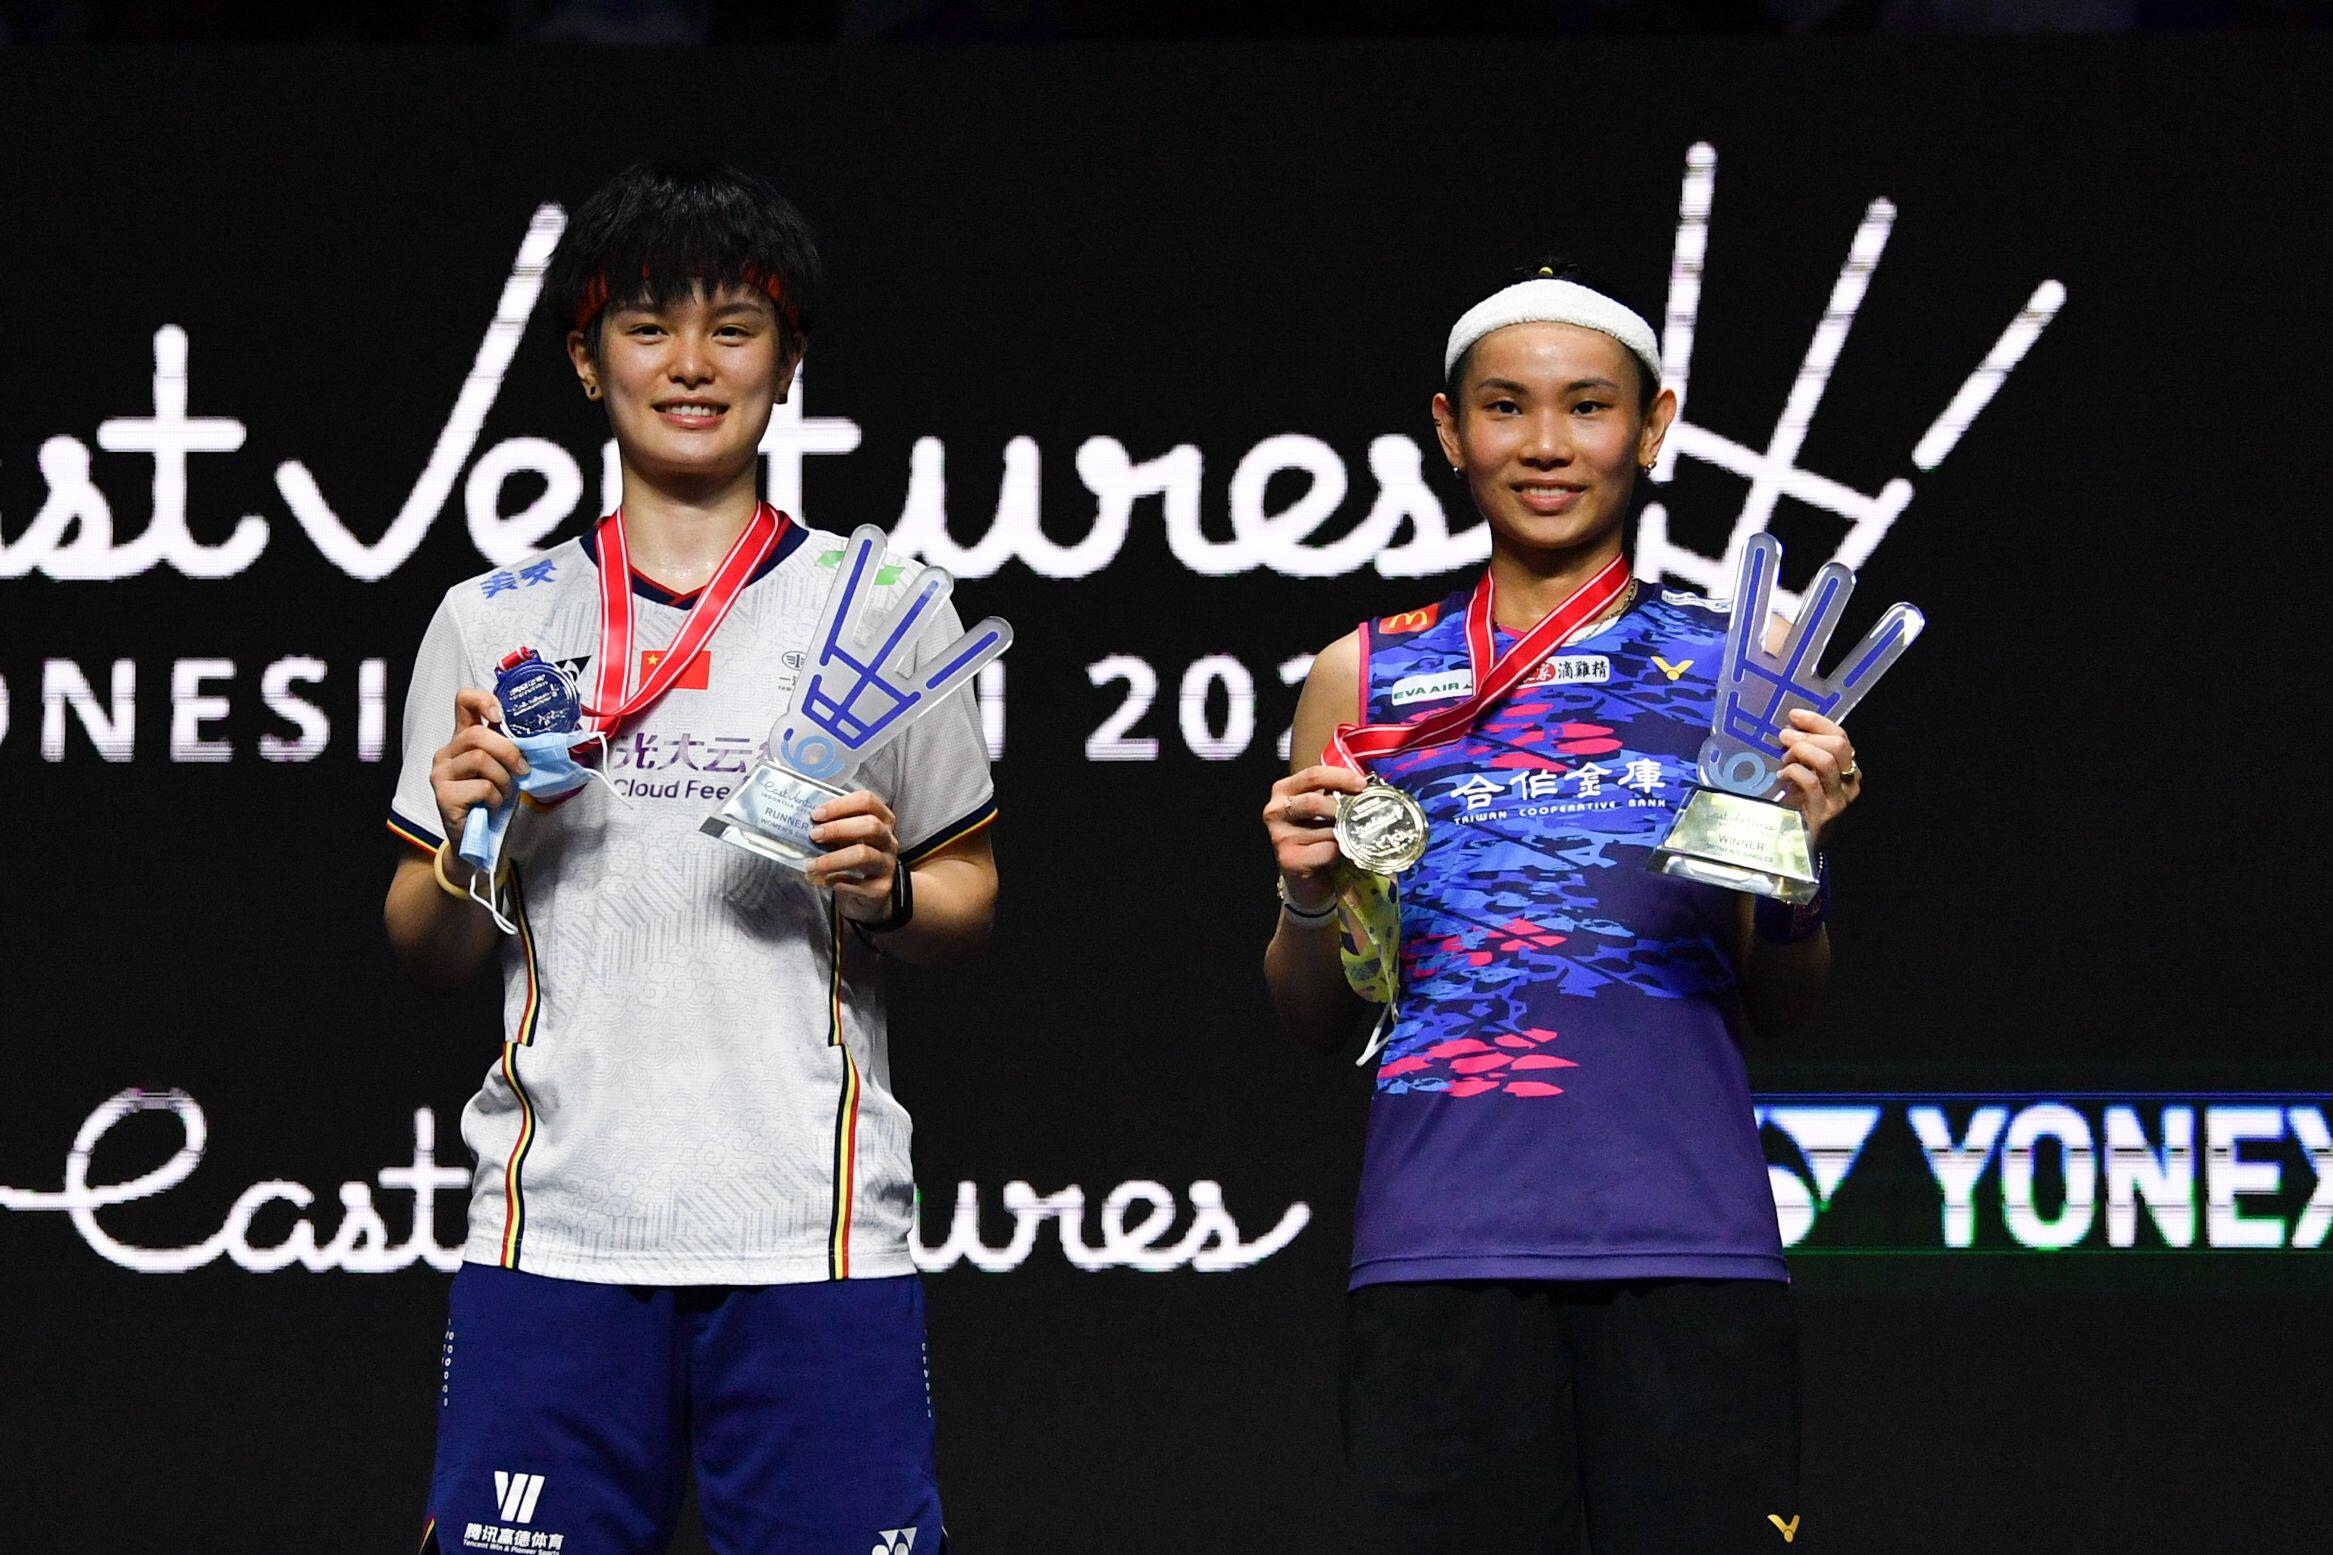 Brilliant TAI Tzu Ying wins the Indonesia Open